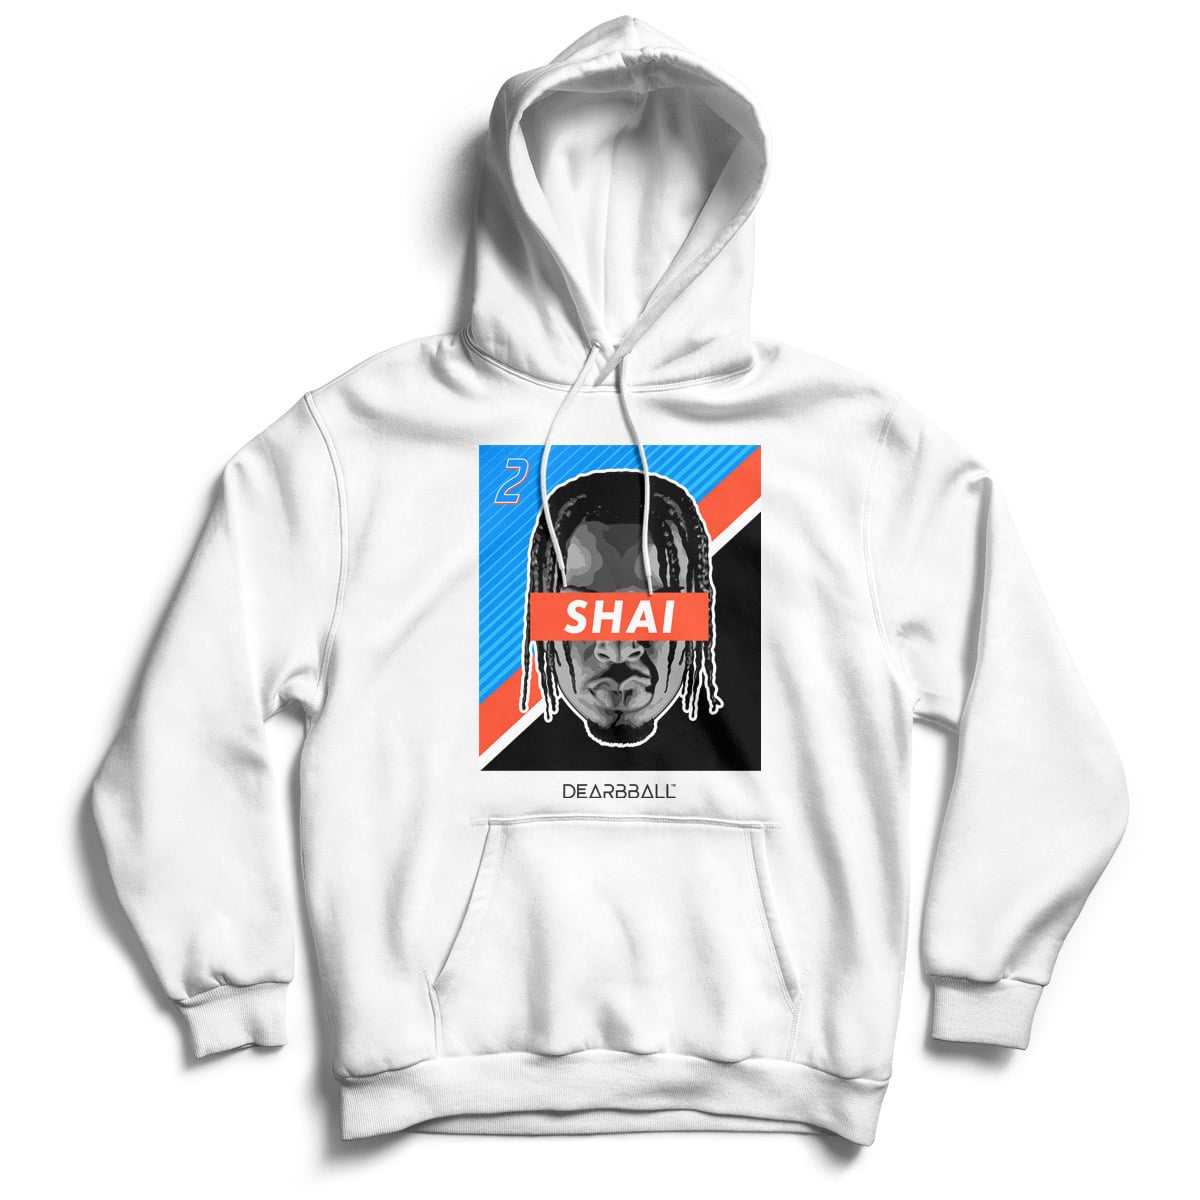 DearBBall Hooded Sweatshirt - SHAI OKC 2 Edition